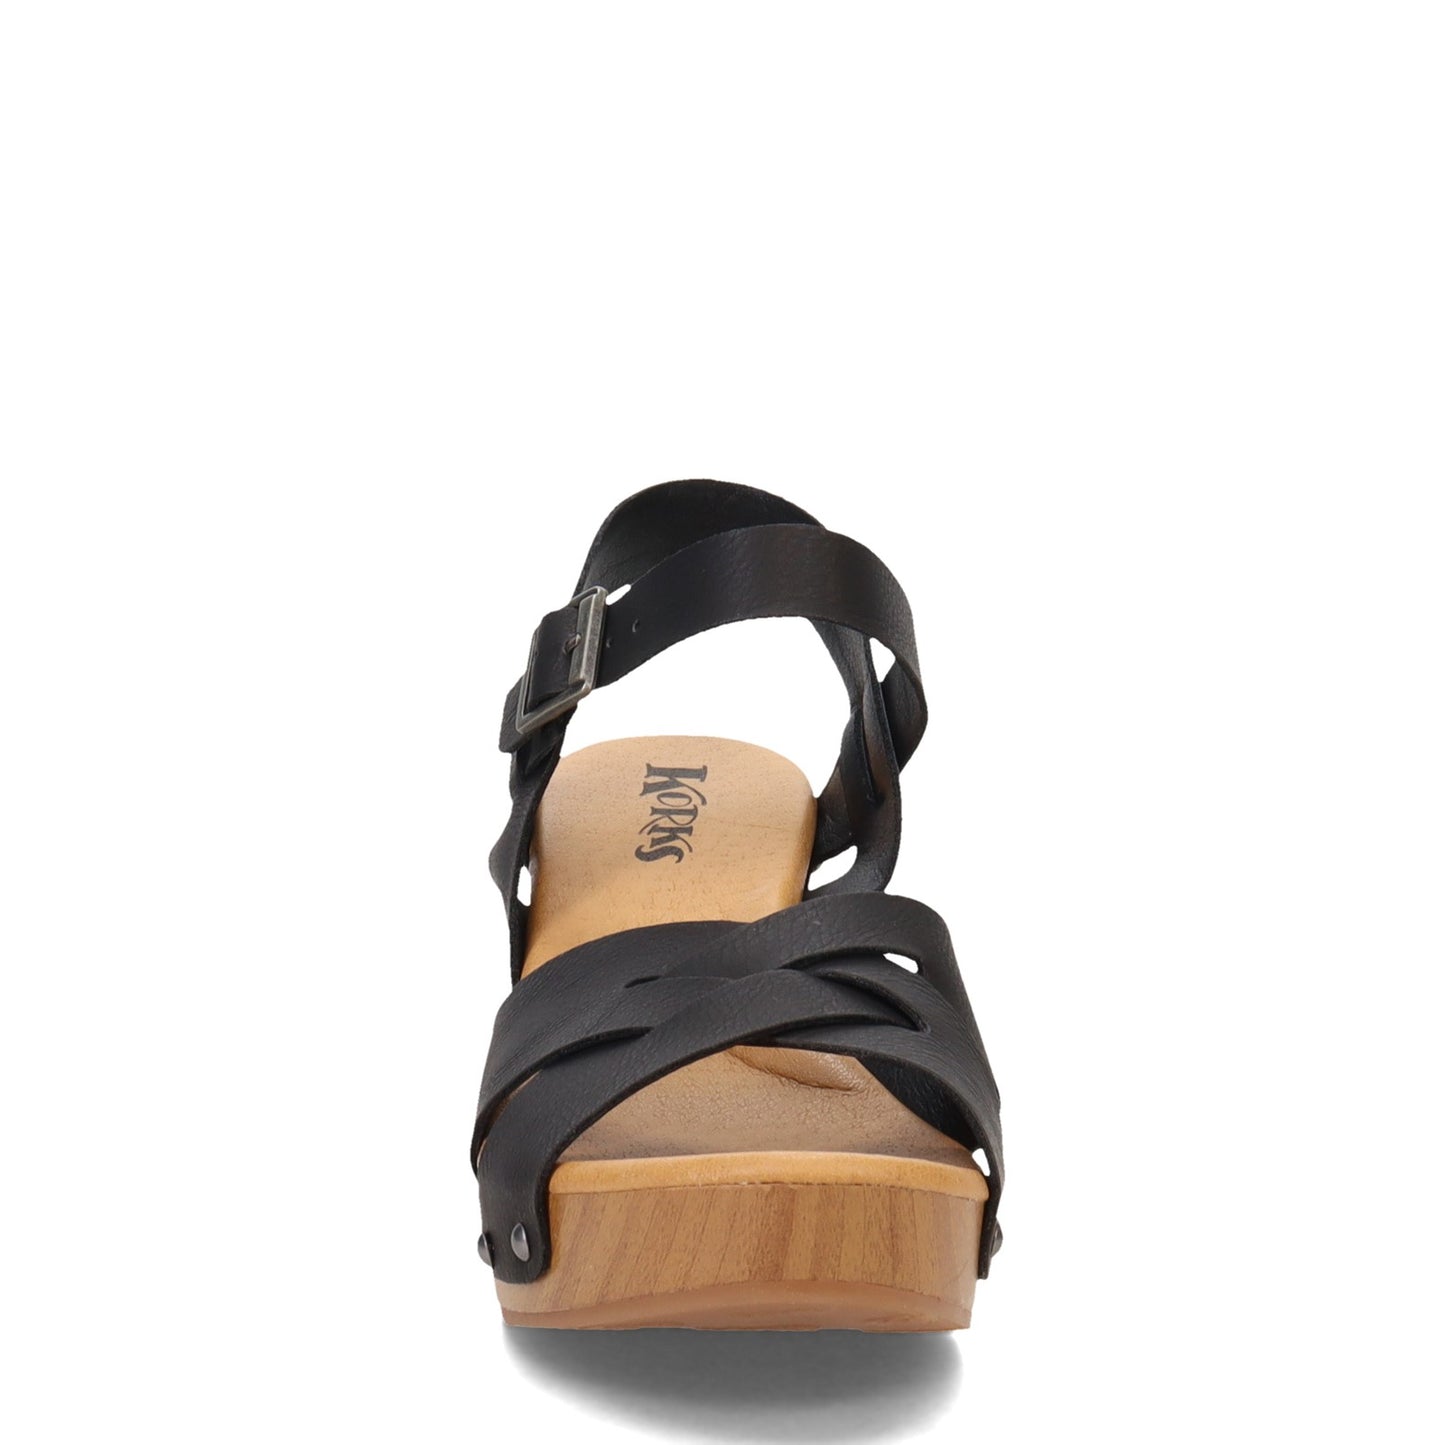 Peltz Shoes  Women's KORKS Bagley Sandal Black KR0013509